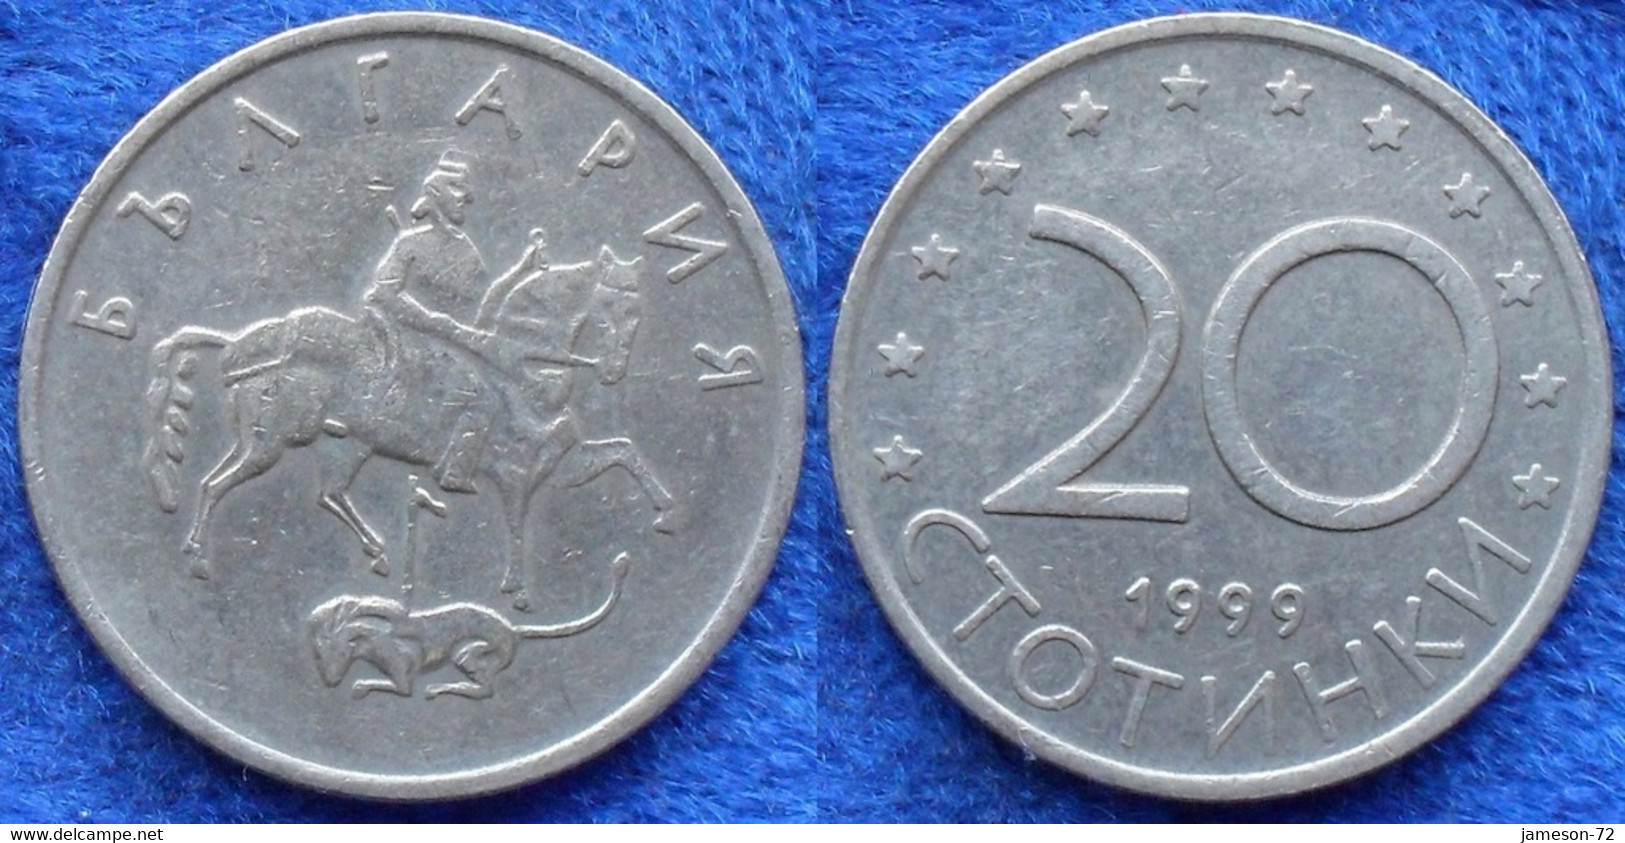 BULGARIA - 20 Stotinki 1999 KM# 241 Reform Coinage (1999) - Edelweiss Coins - Bulgarie